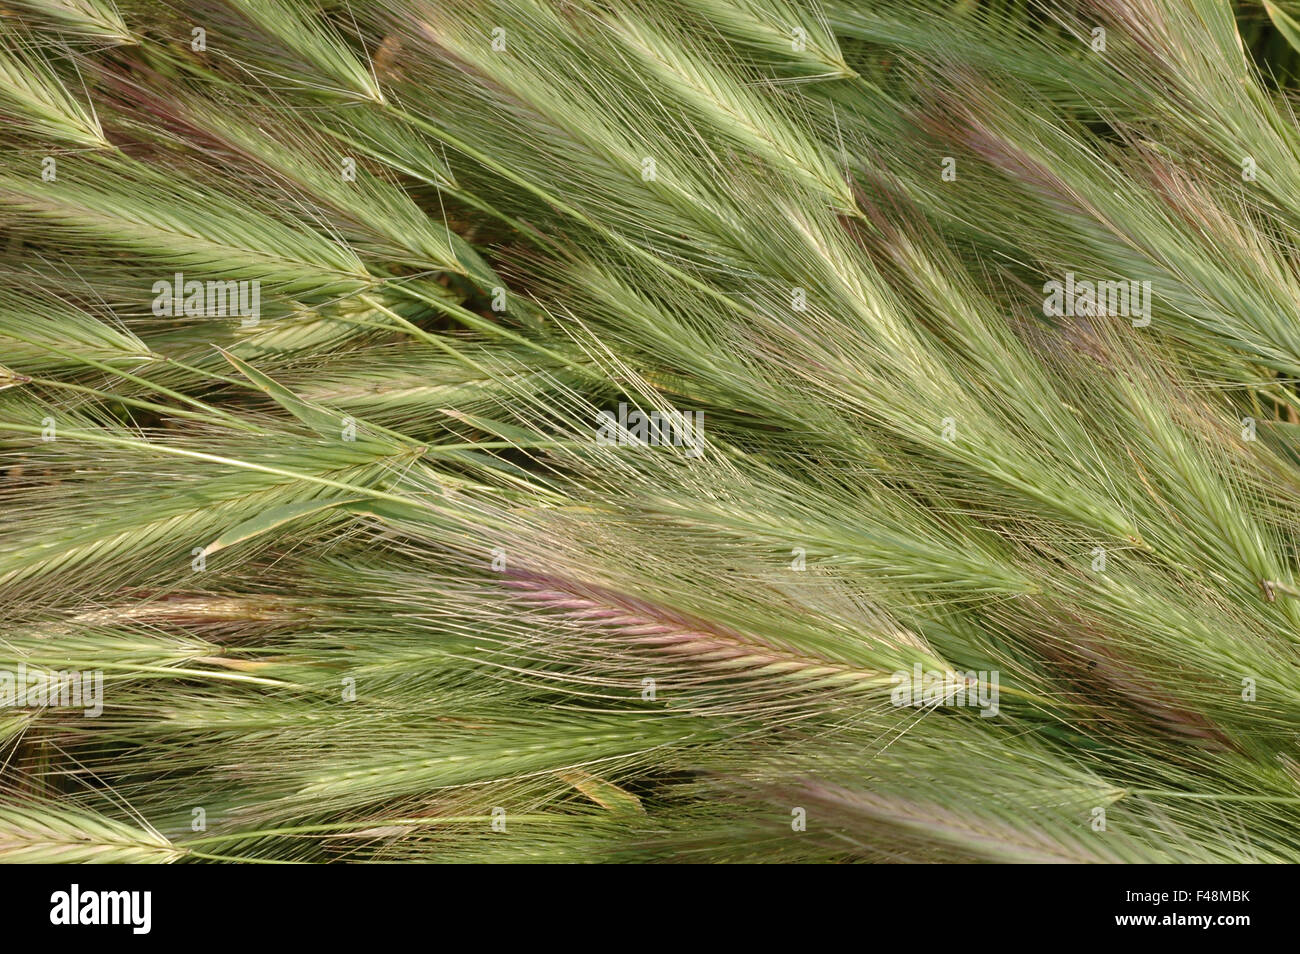 Wall barley grass Hordeum murinum closeup view. Stock Photo